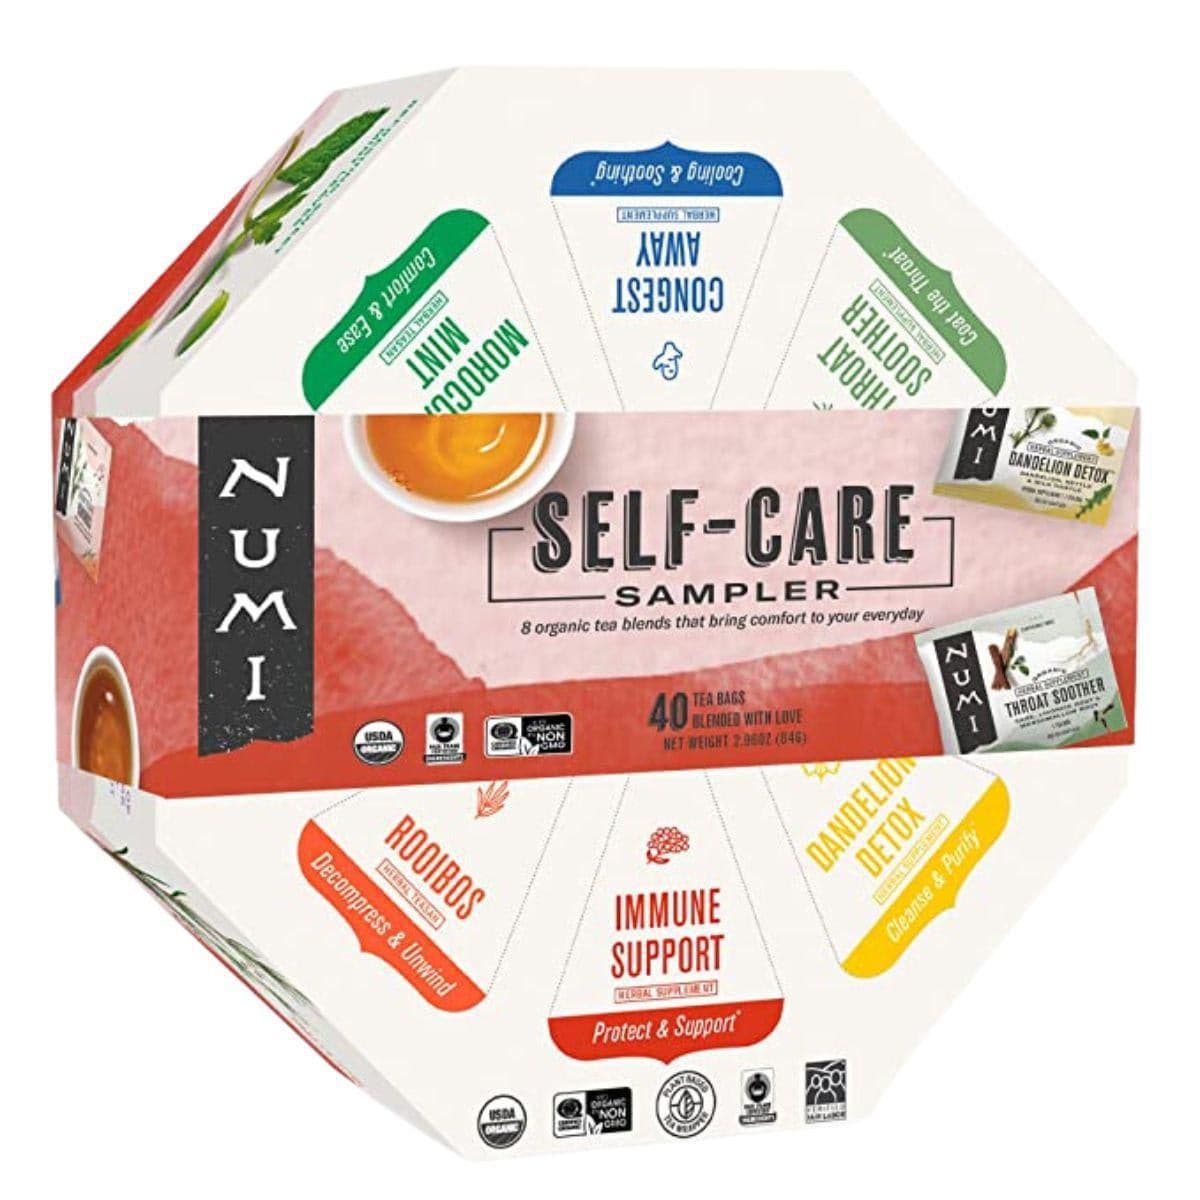 Numi Organic Tea Self-Care Sampler, Herbal Tea Gift Set, 40 Tea Bags Assortment